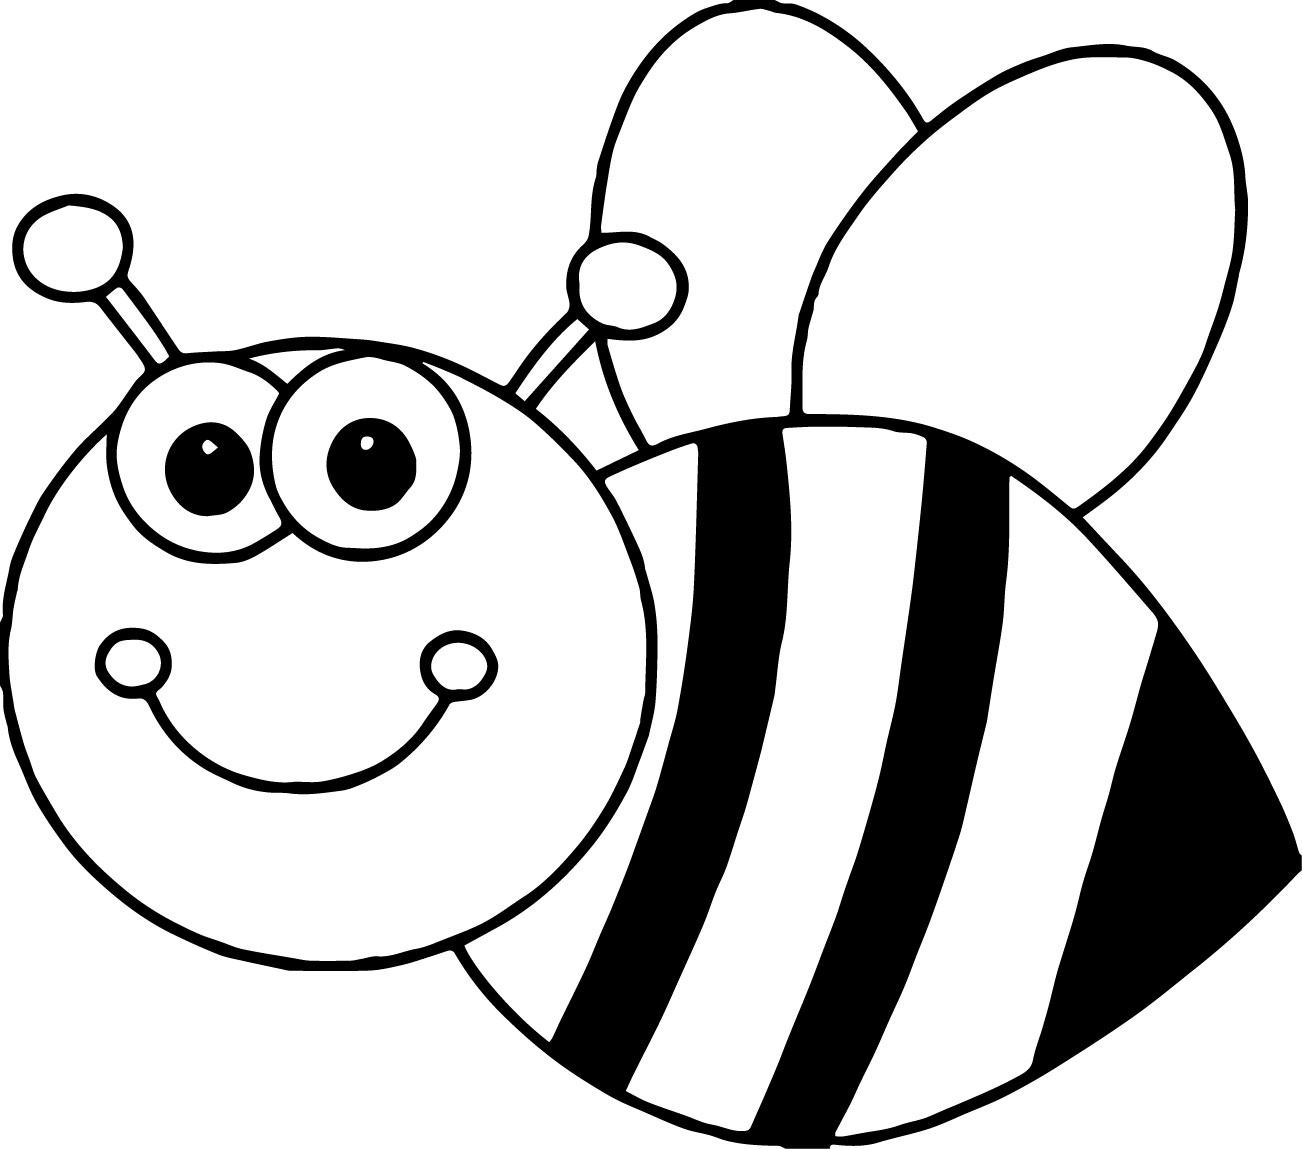 Bumble Bee Template Printable